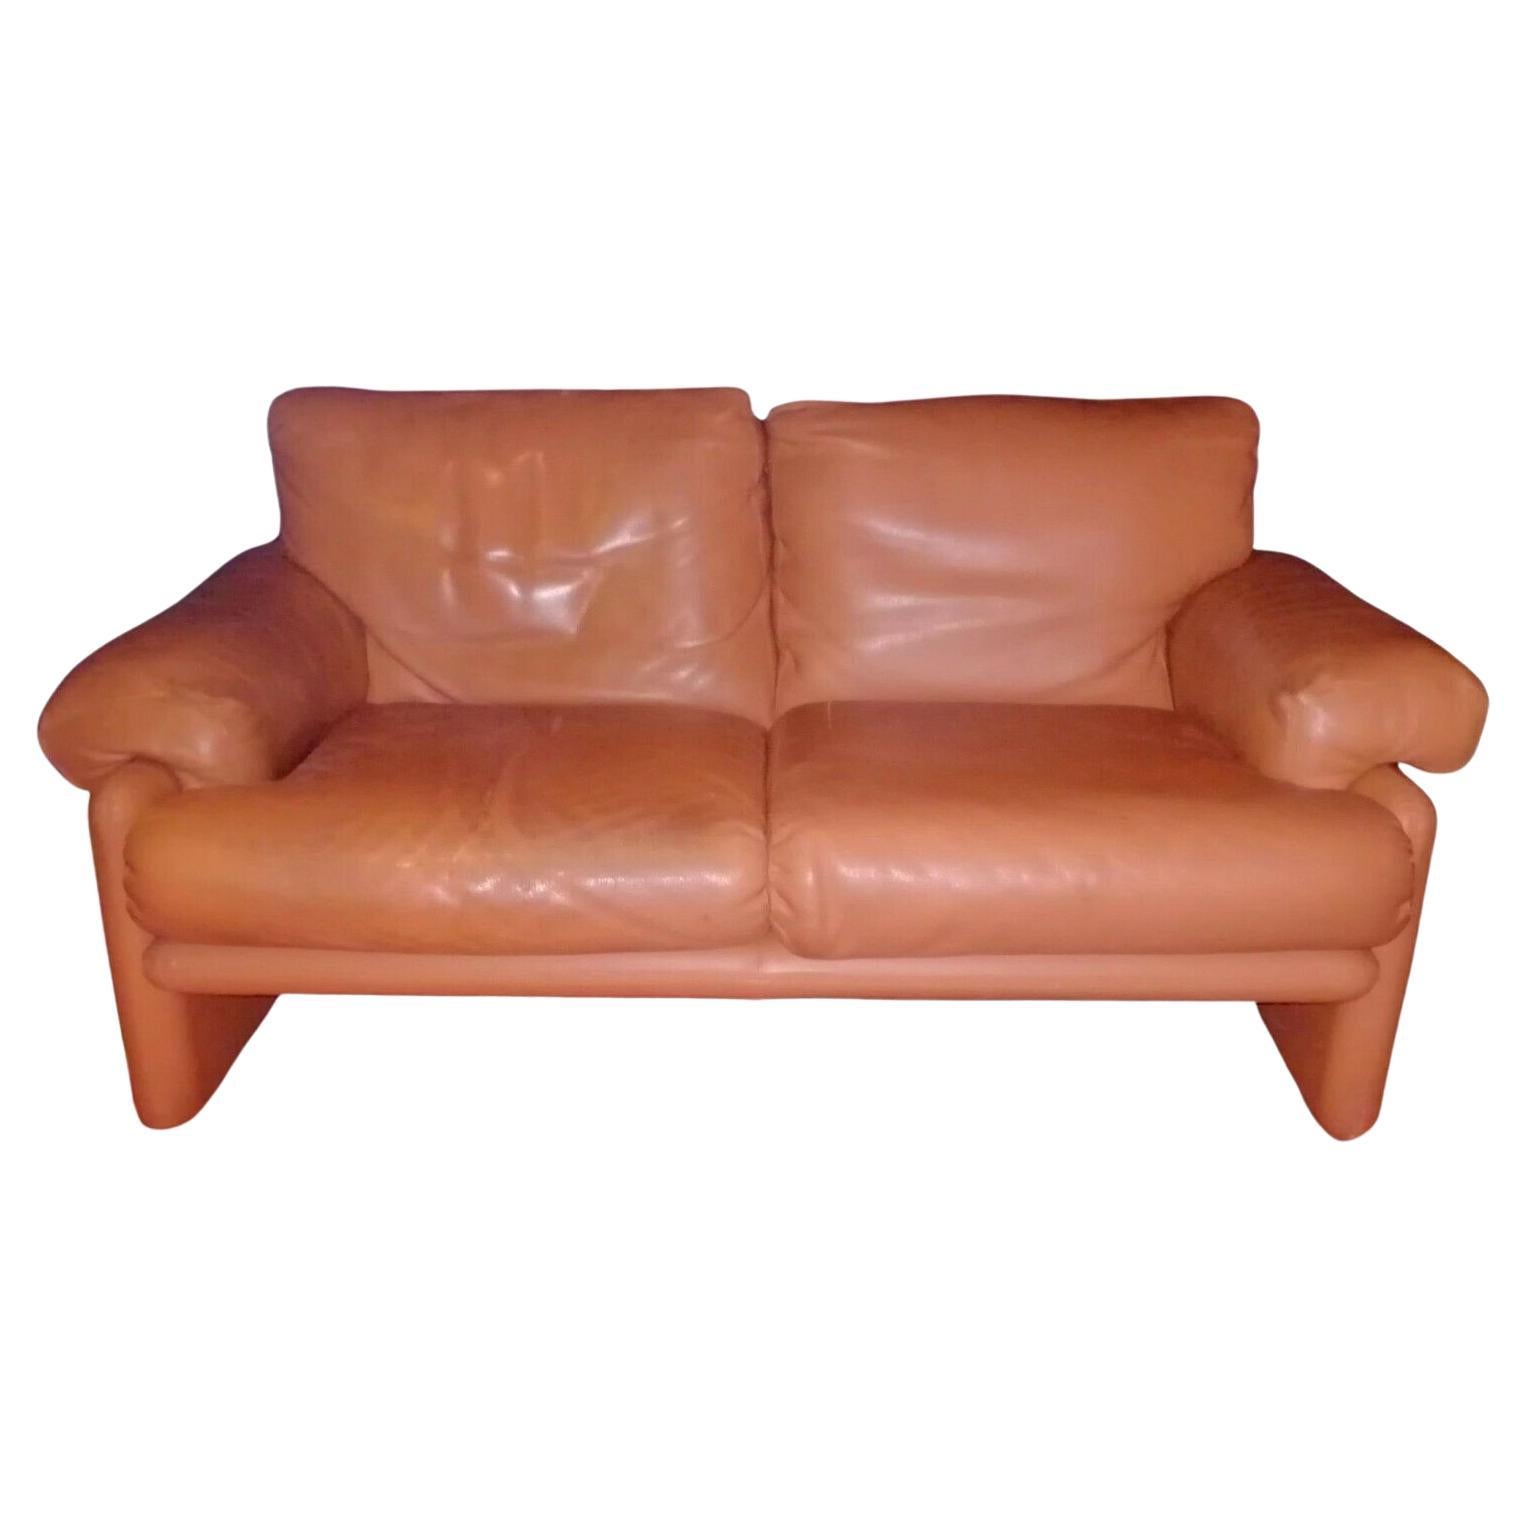 Zweisitzer-Sofa „Coronado“ Design Tobia Scarpa für B&B Italia, 1970er Jahre